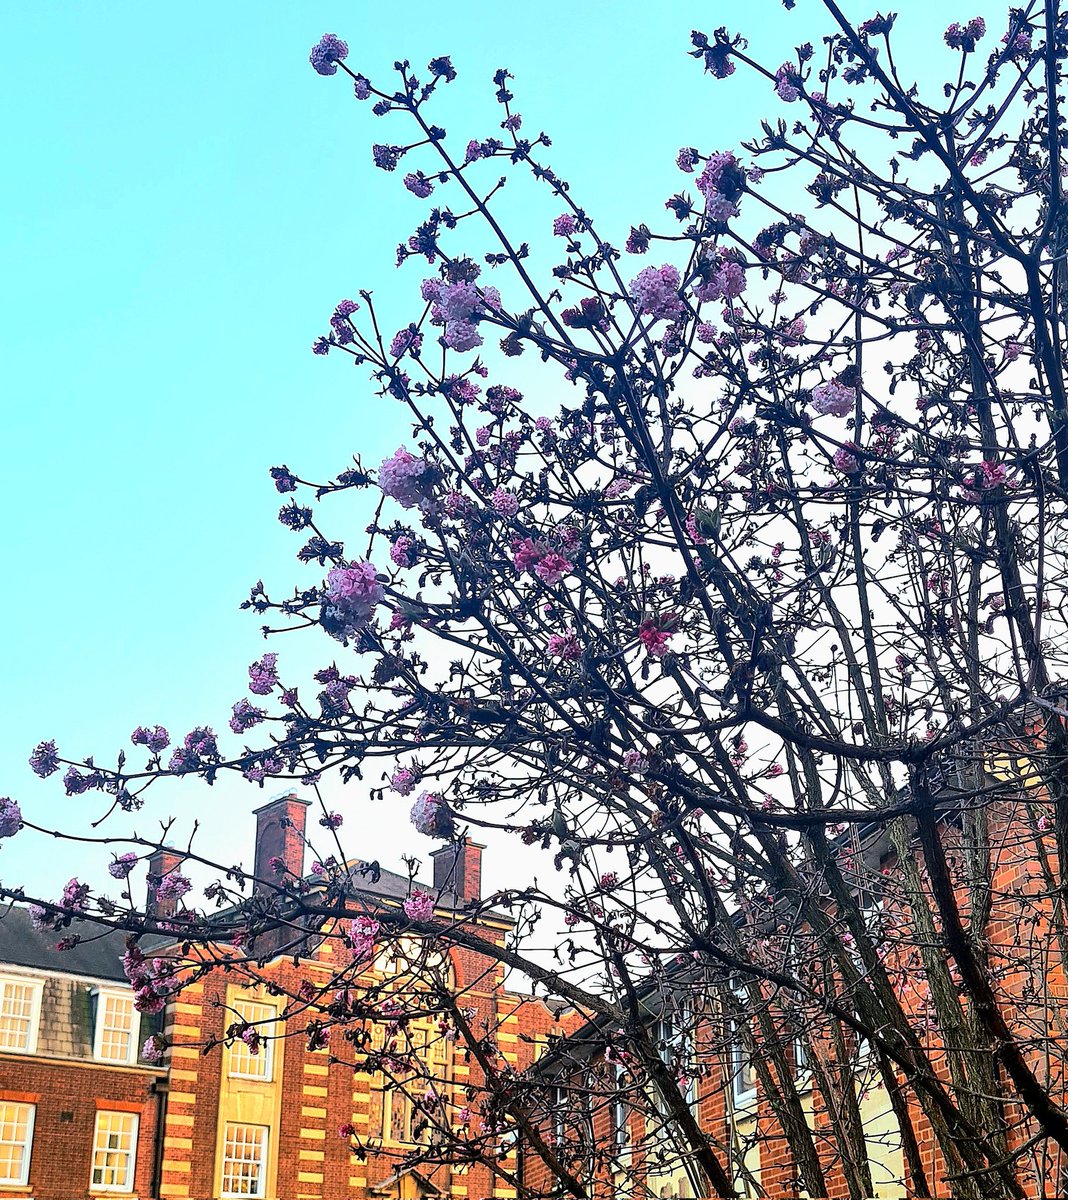 Spring is sprung on campus #hulluni